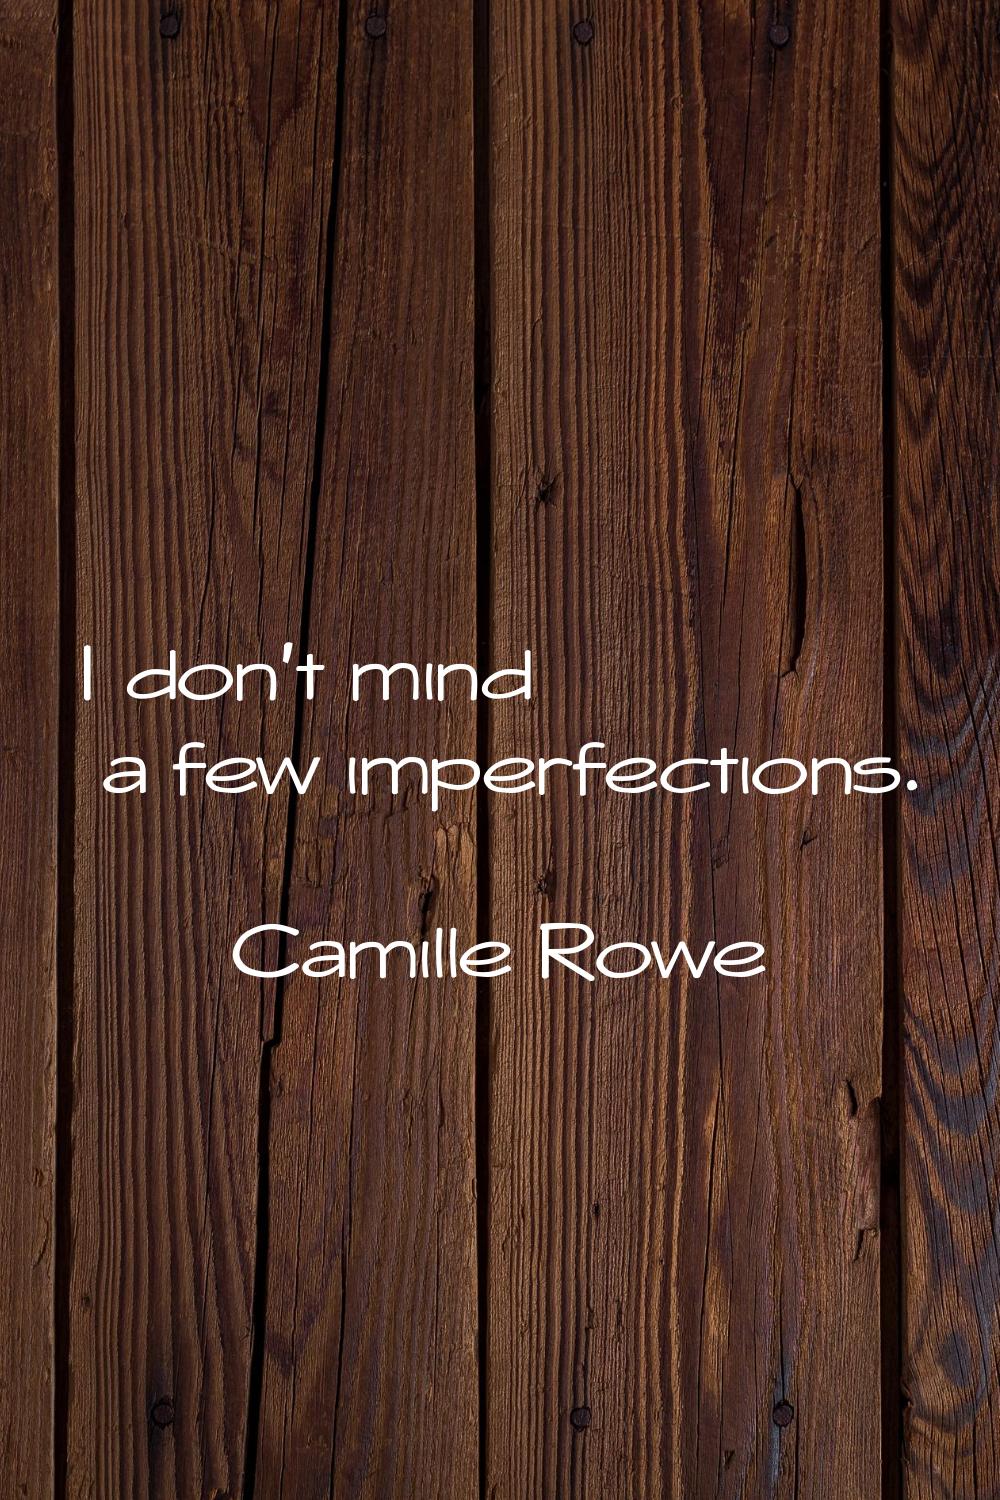 I don't mind a few imperfections.